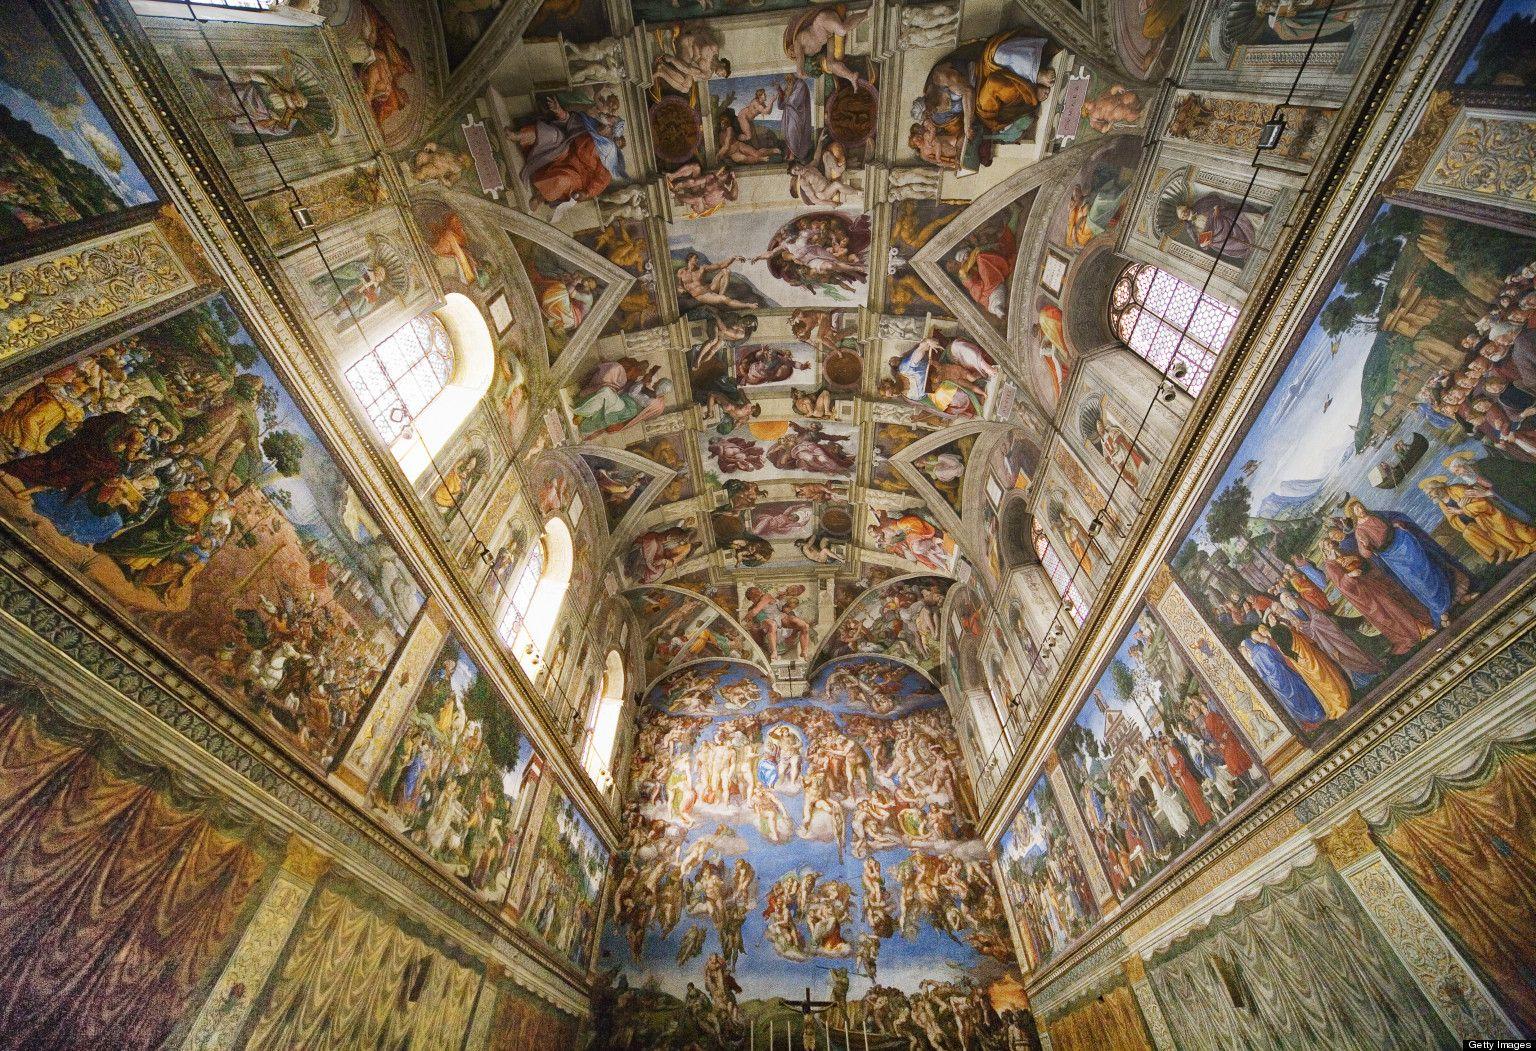 1536x1051px Sistine Chapel 861.48 KB